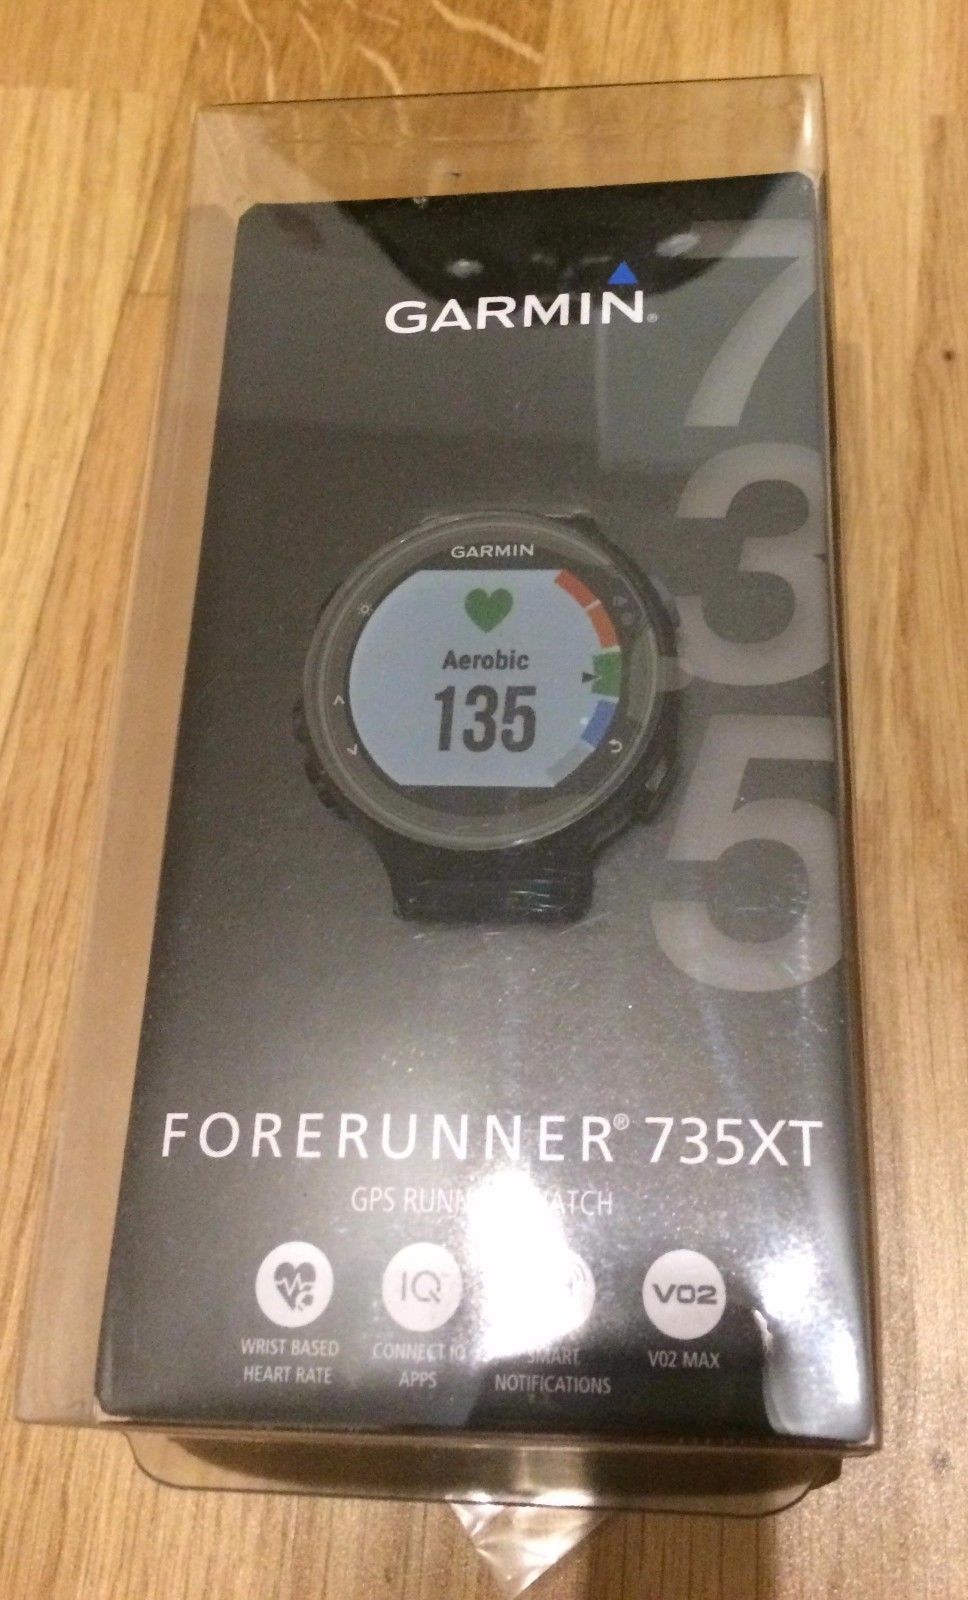  NEU Garmin Forerunner 735XT, schwarz/grau GPS mit built-in Heart Rate Monitor